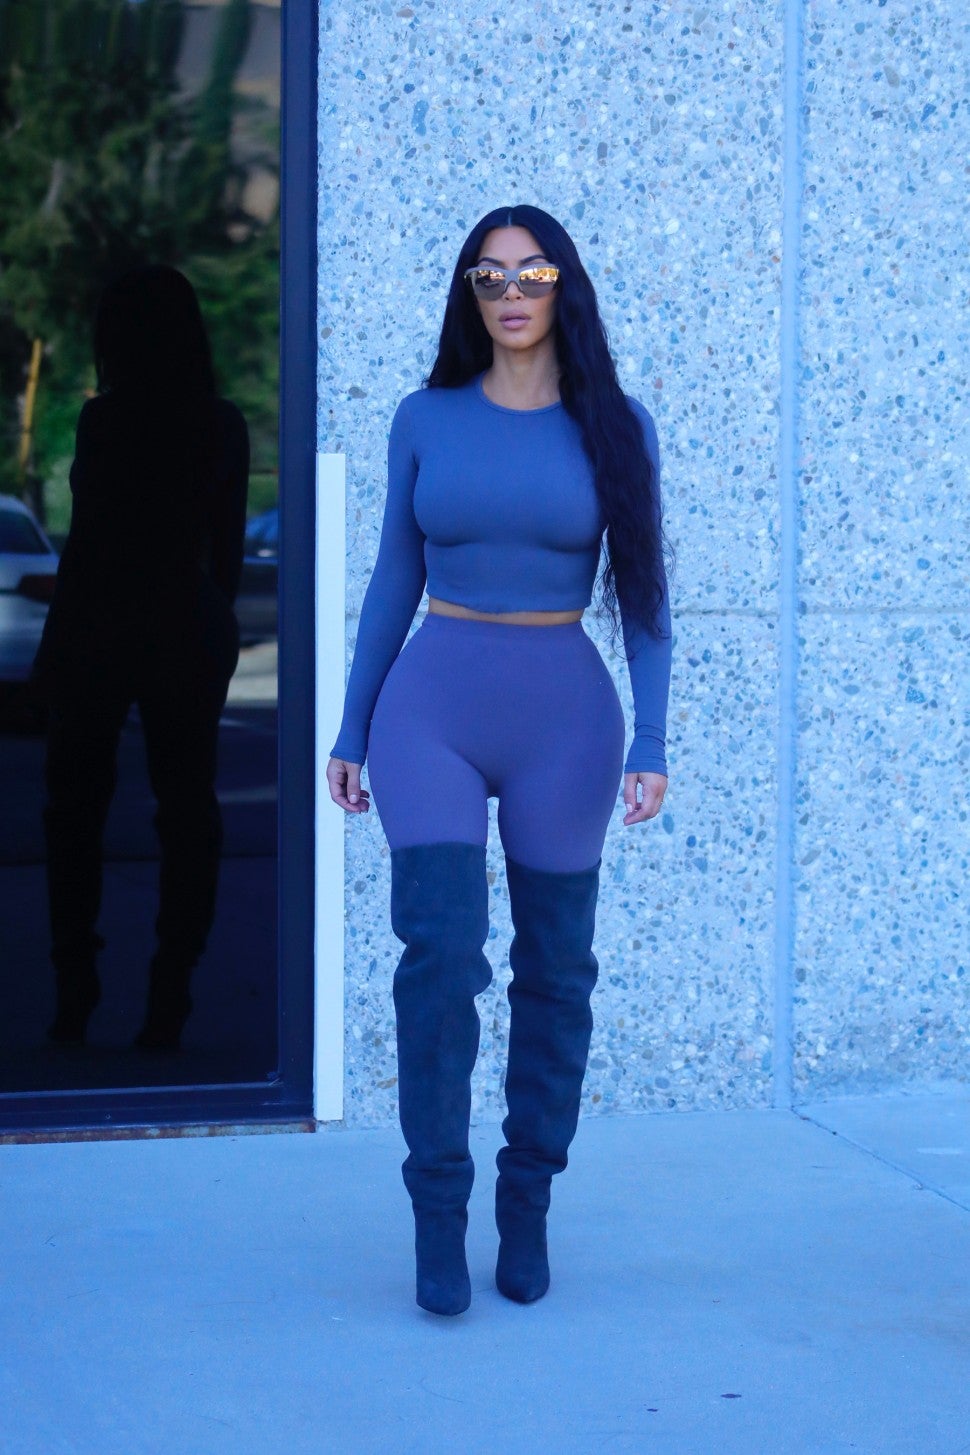 Kim Kardashian in gray spandex outfit